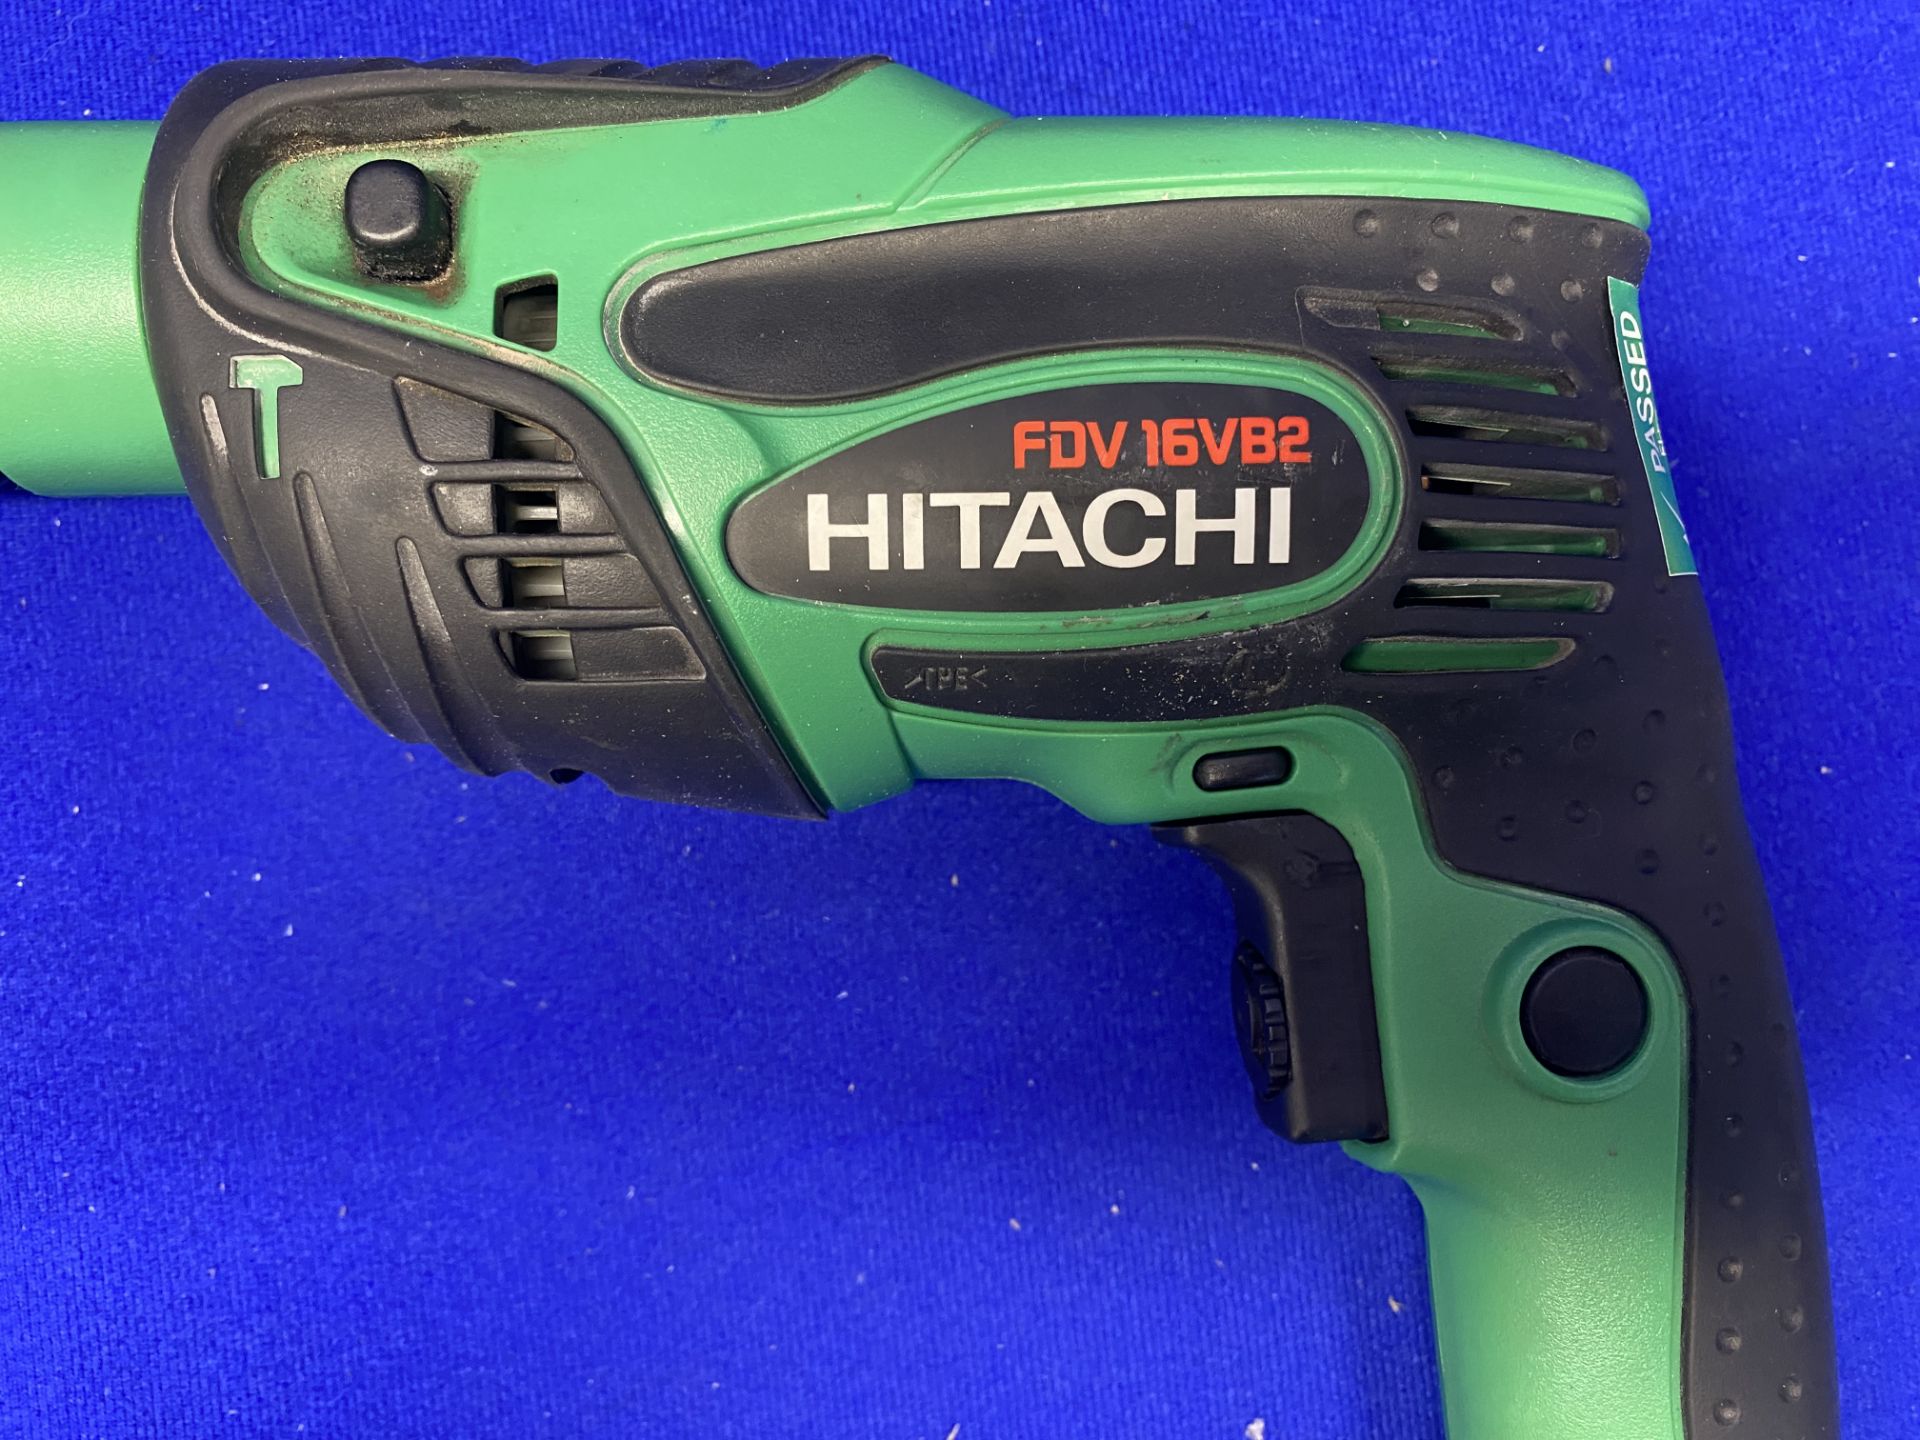 Hitachi FDV16VB2 13mm Impact Drill 550W - Image 4 of 8